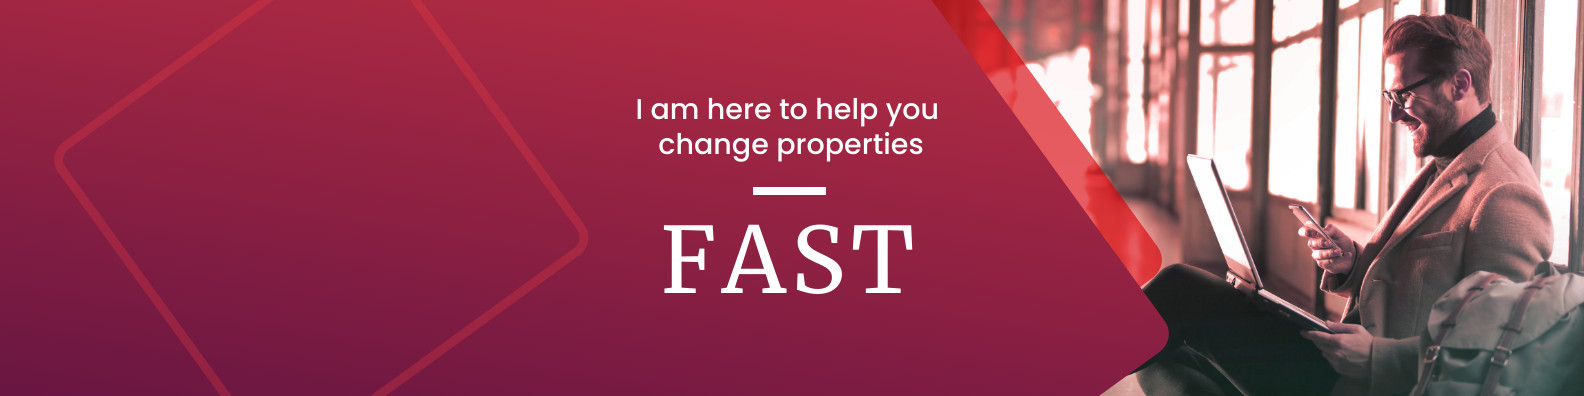 Fast Property Change Linkedin Profile BG Linkedin Profile Background 1584x396